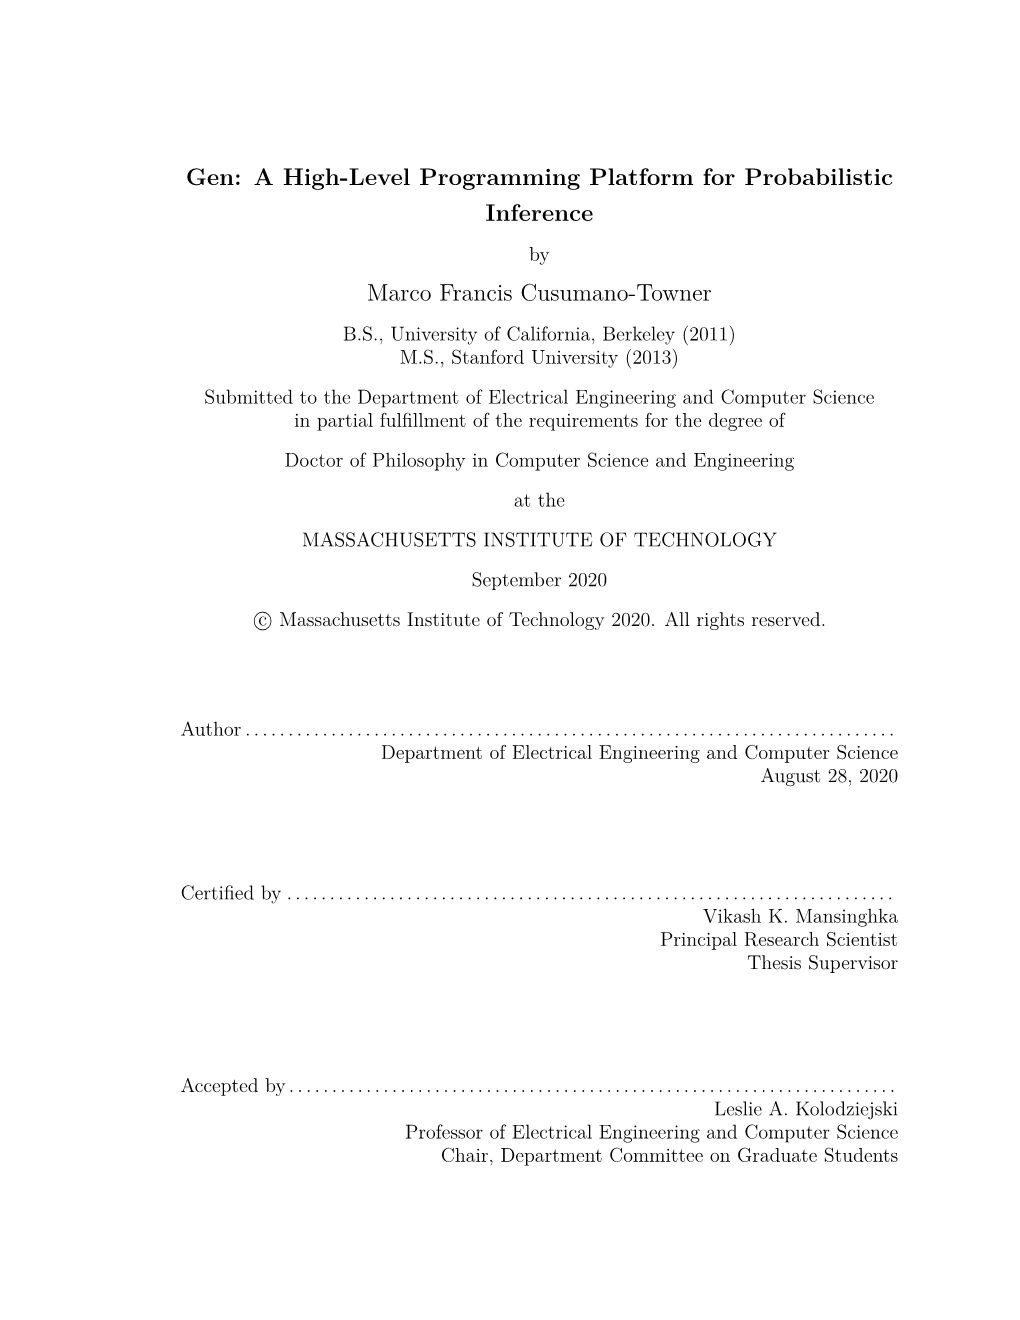 Gen: a High-Level Programming Platform for Probabilistic Inference